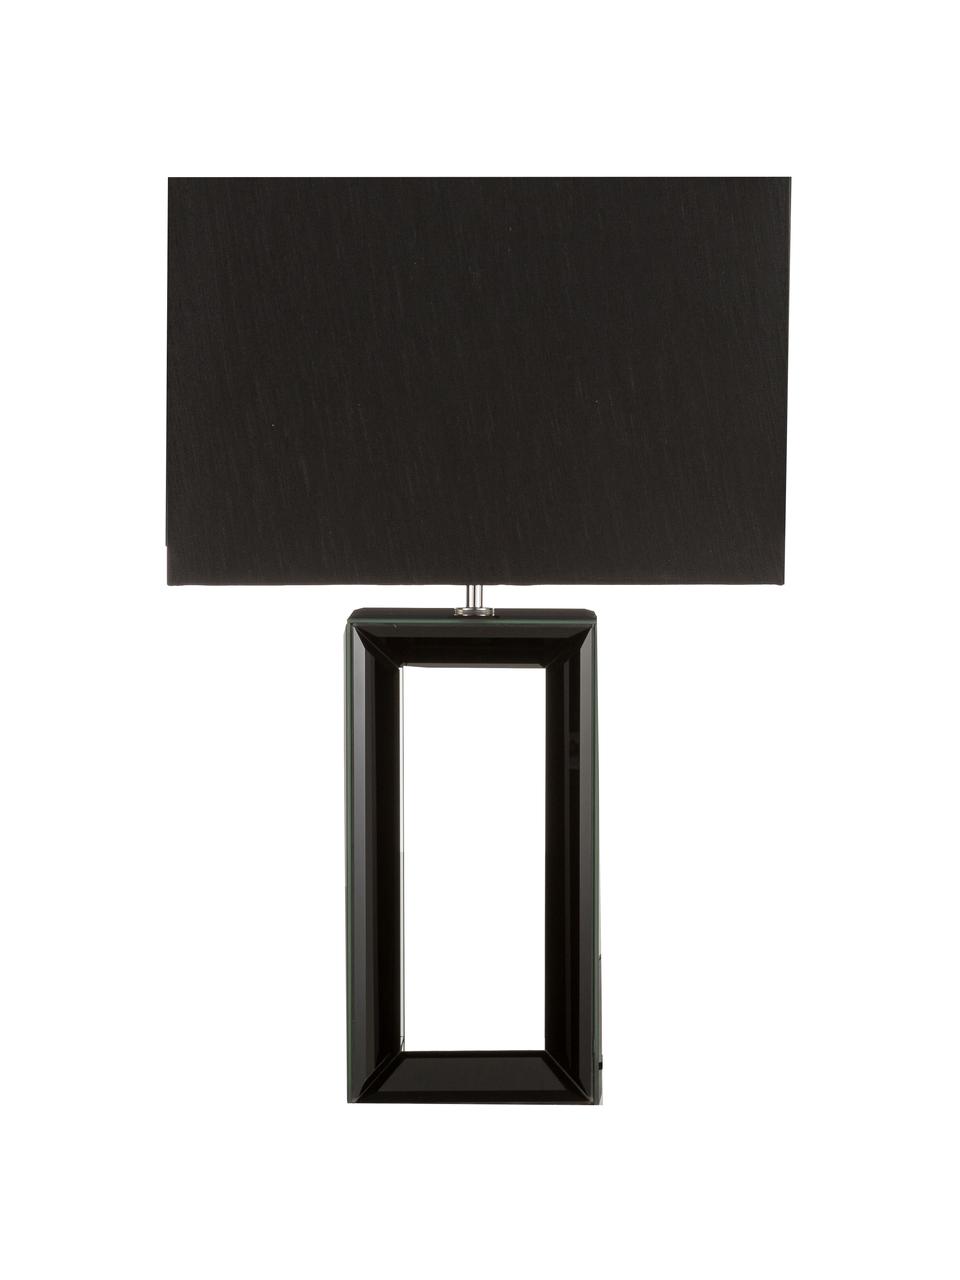 Tafellamp Serafina van gelakt spiegelglas, Lampvoet: spiegelglas, Lampenkap: textiel, Lampvoet: zwart, gespiegeld. Lampenkap: zwart, 38 x 58 cm